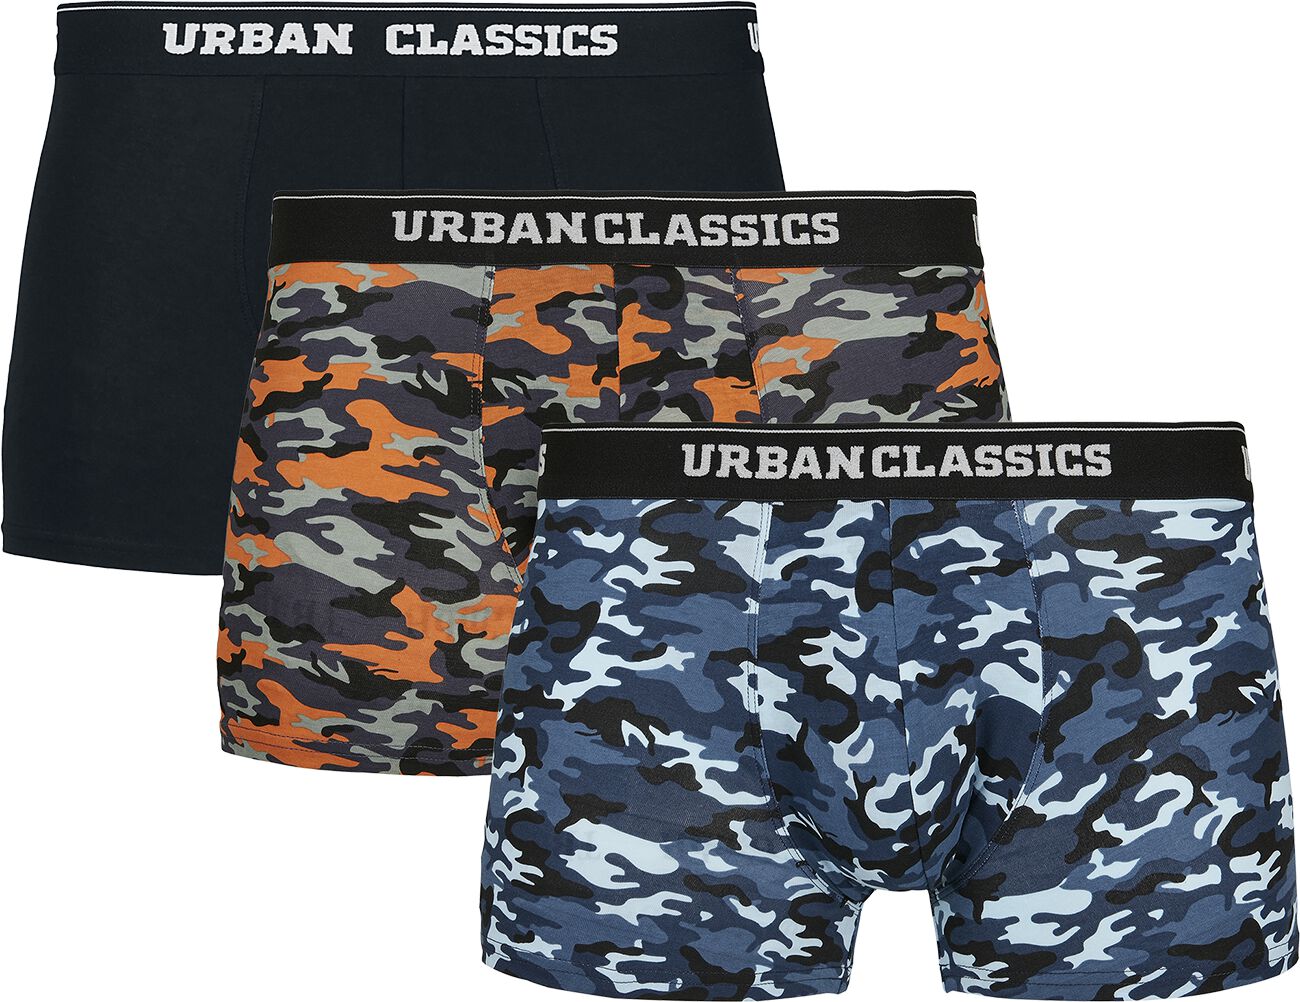 Urban Classics Boxer Short 3-Pack Boxershort-Set schwarz camouflage in L